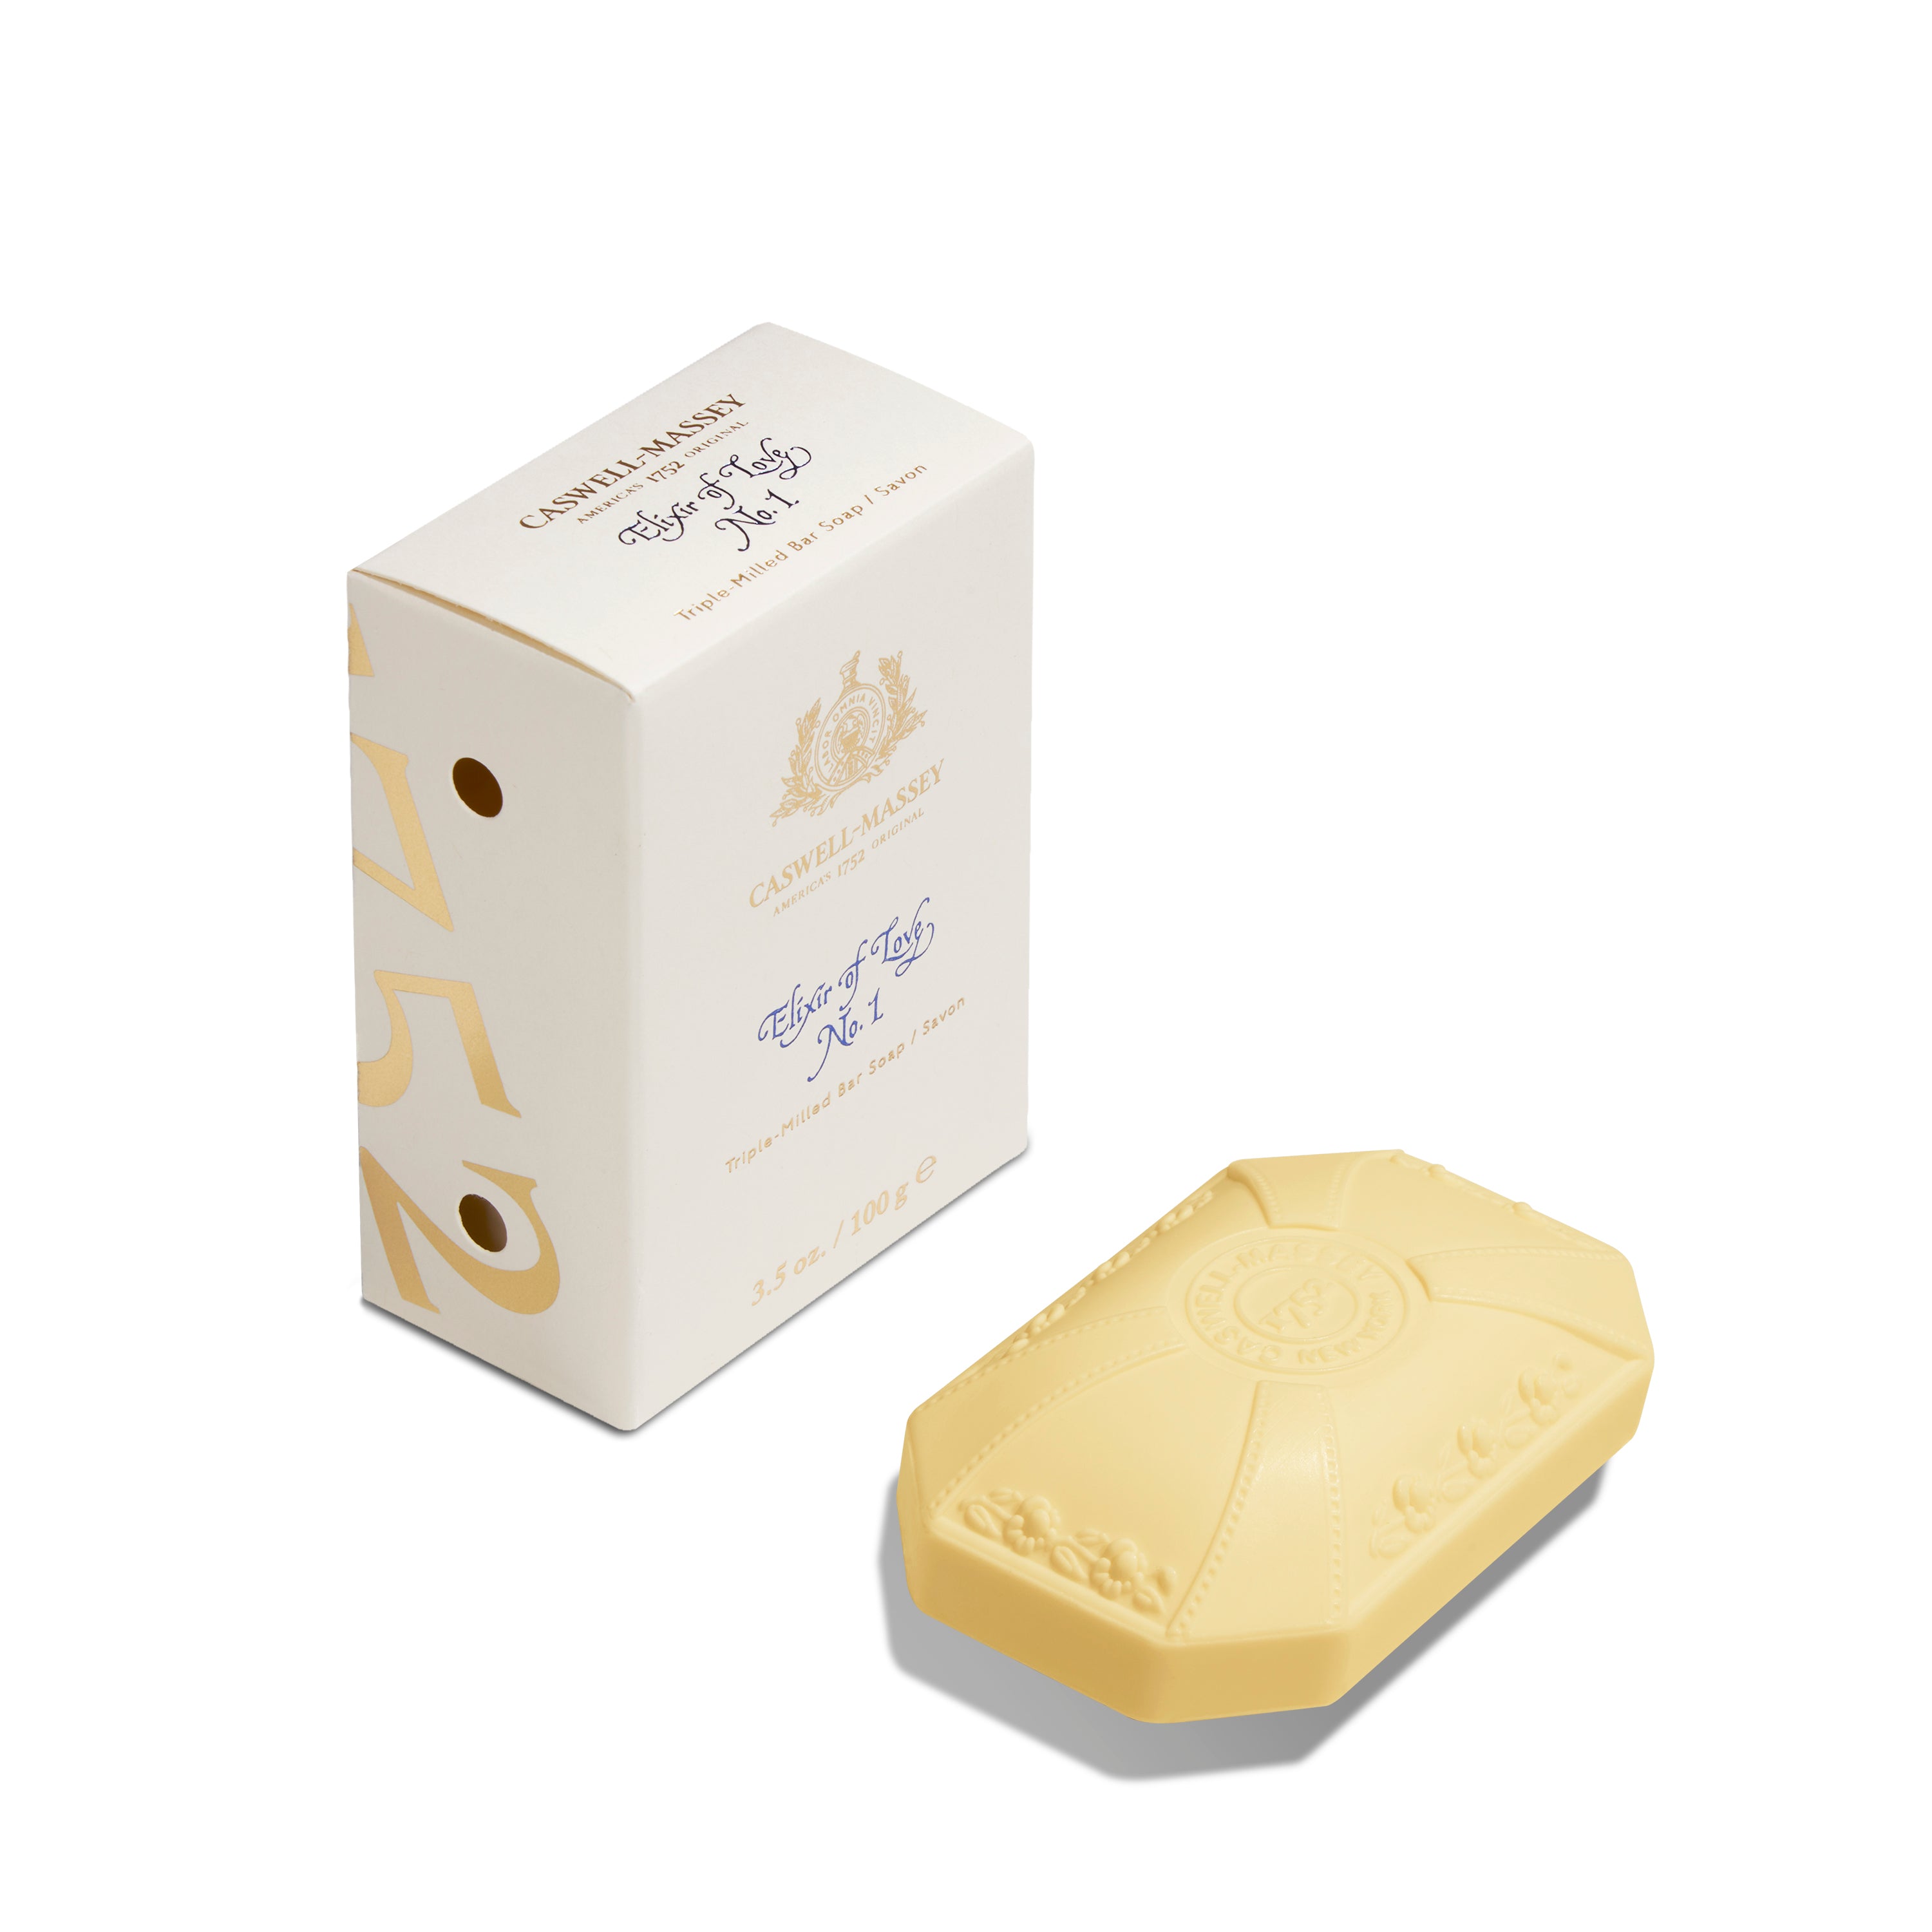 Elixir of Love Packshot soap with carton